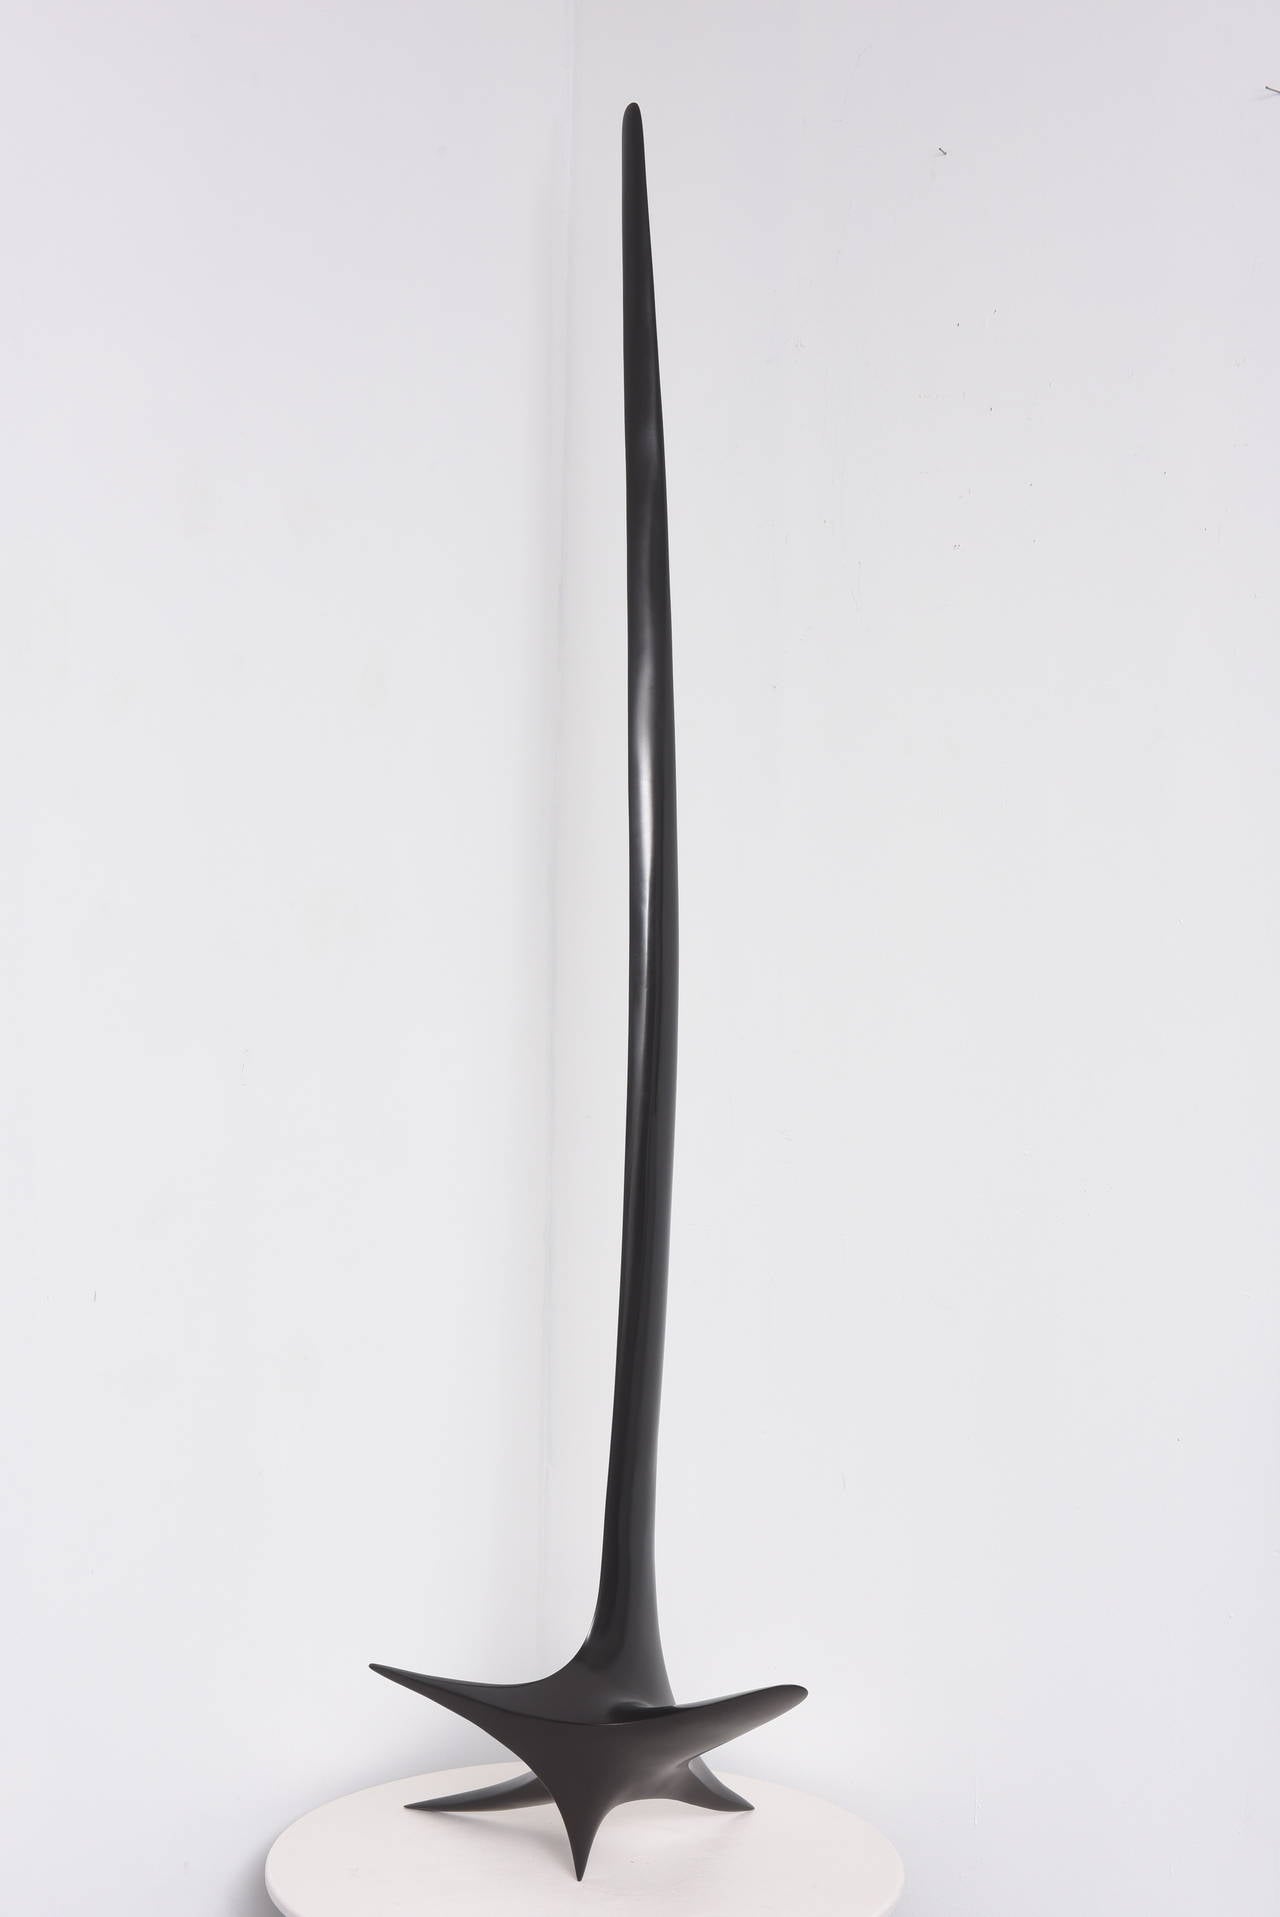 Abstract Sculpture Patrice Breteau - Icare - Glaçage